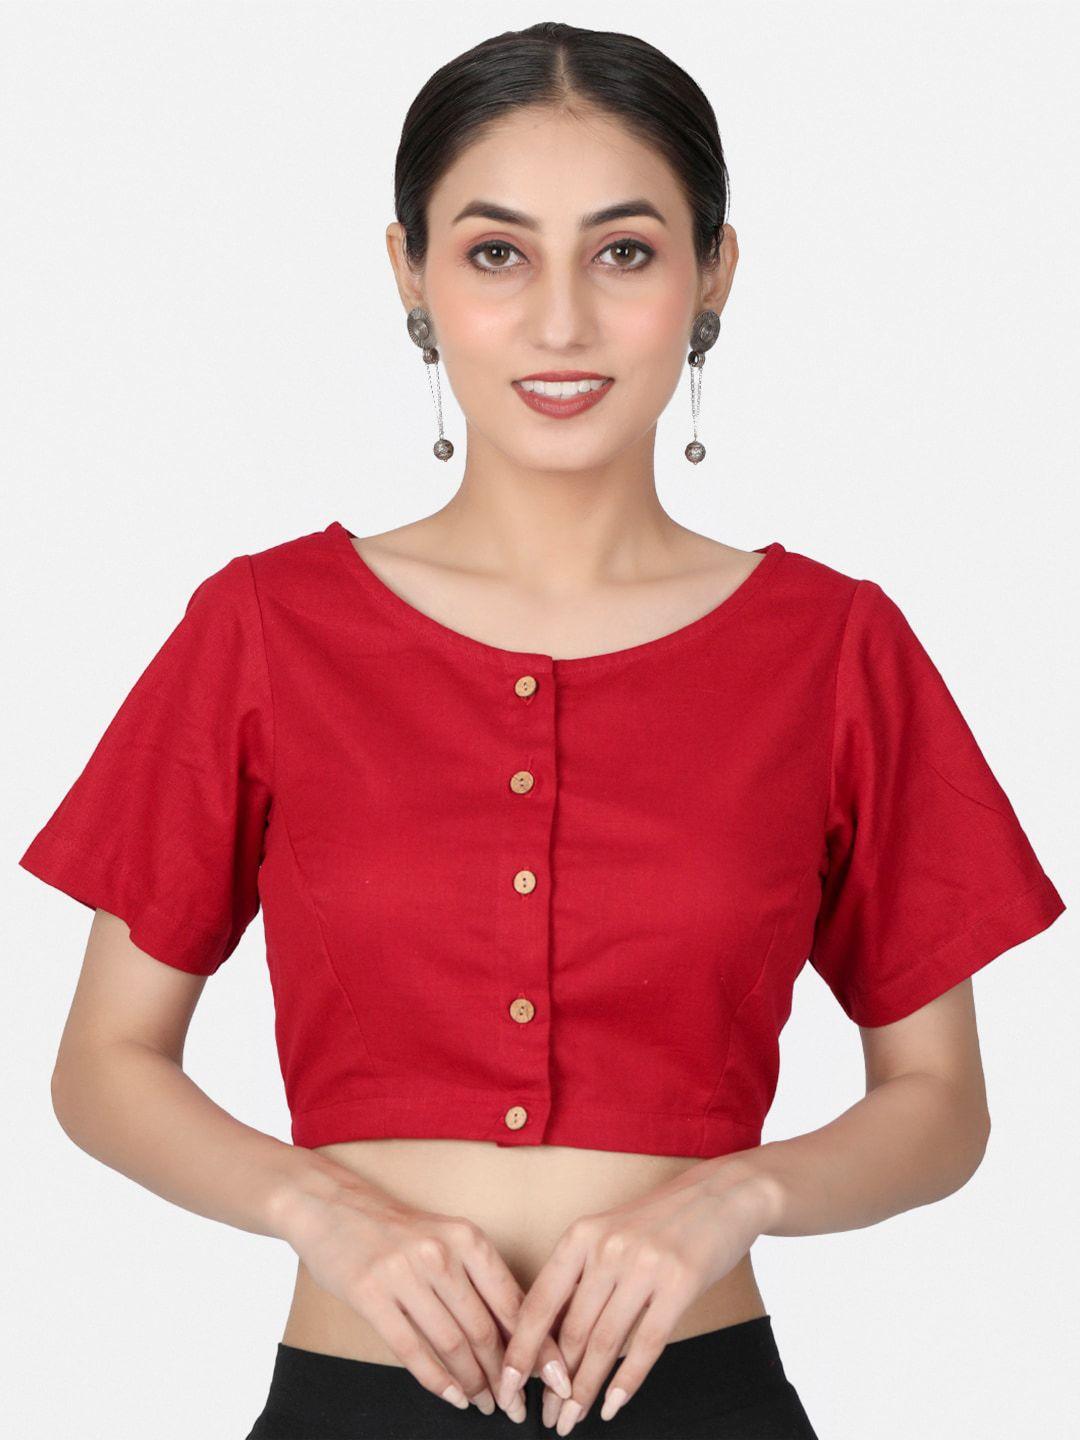 llajja pure cotton readymade saree blouse